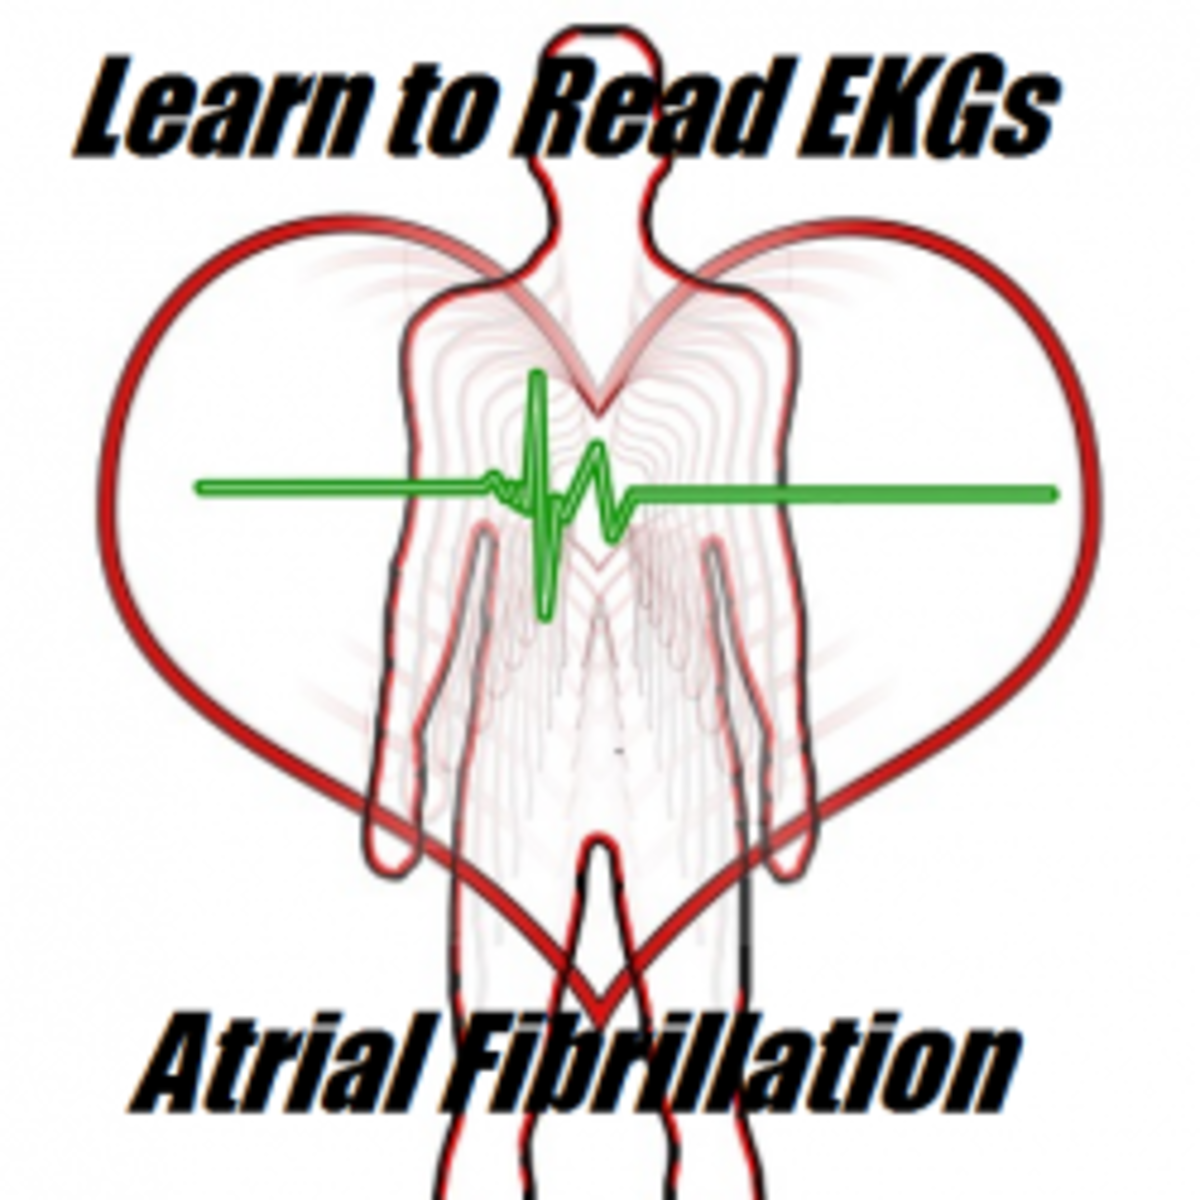 How to Read EKGs: Identifying Atrial Fibrillation